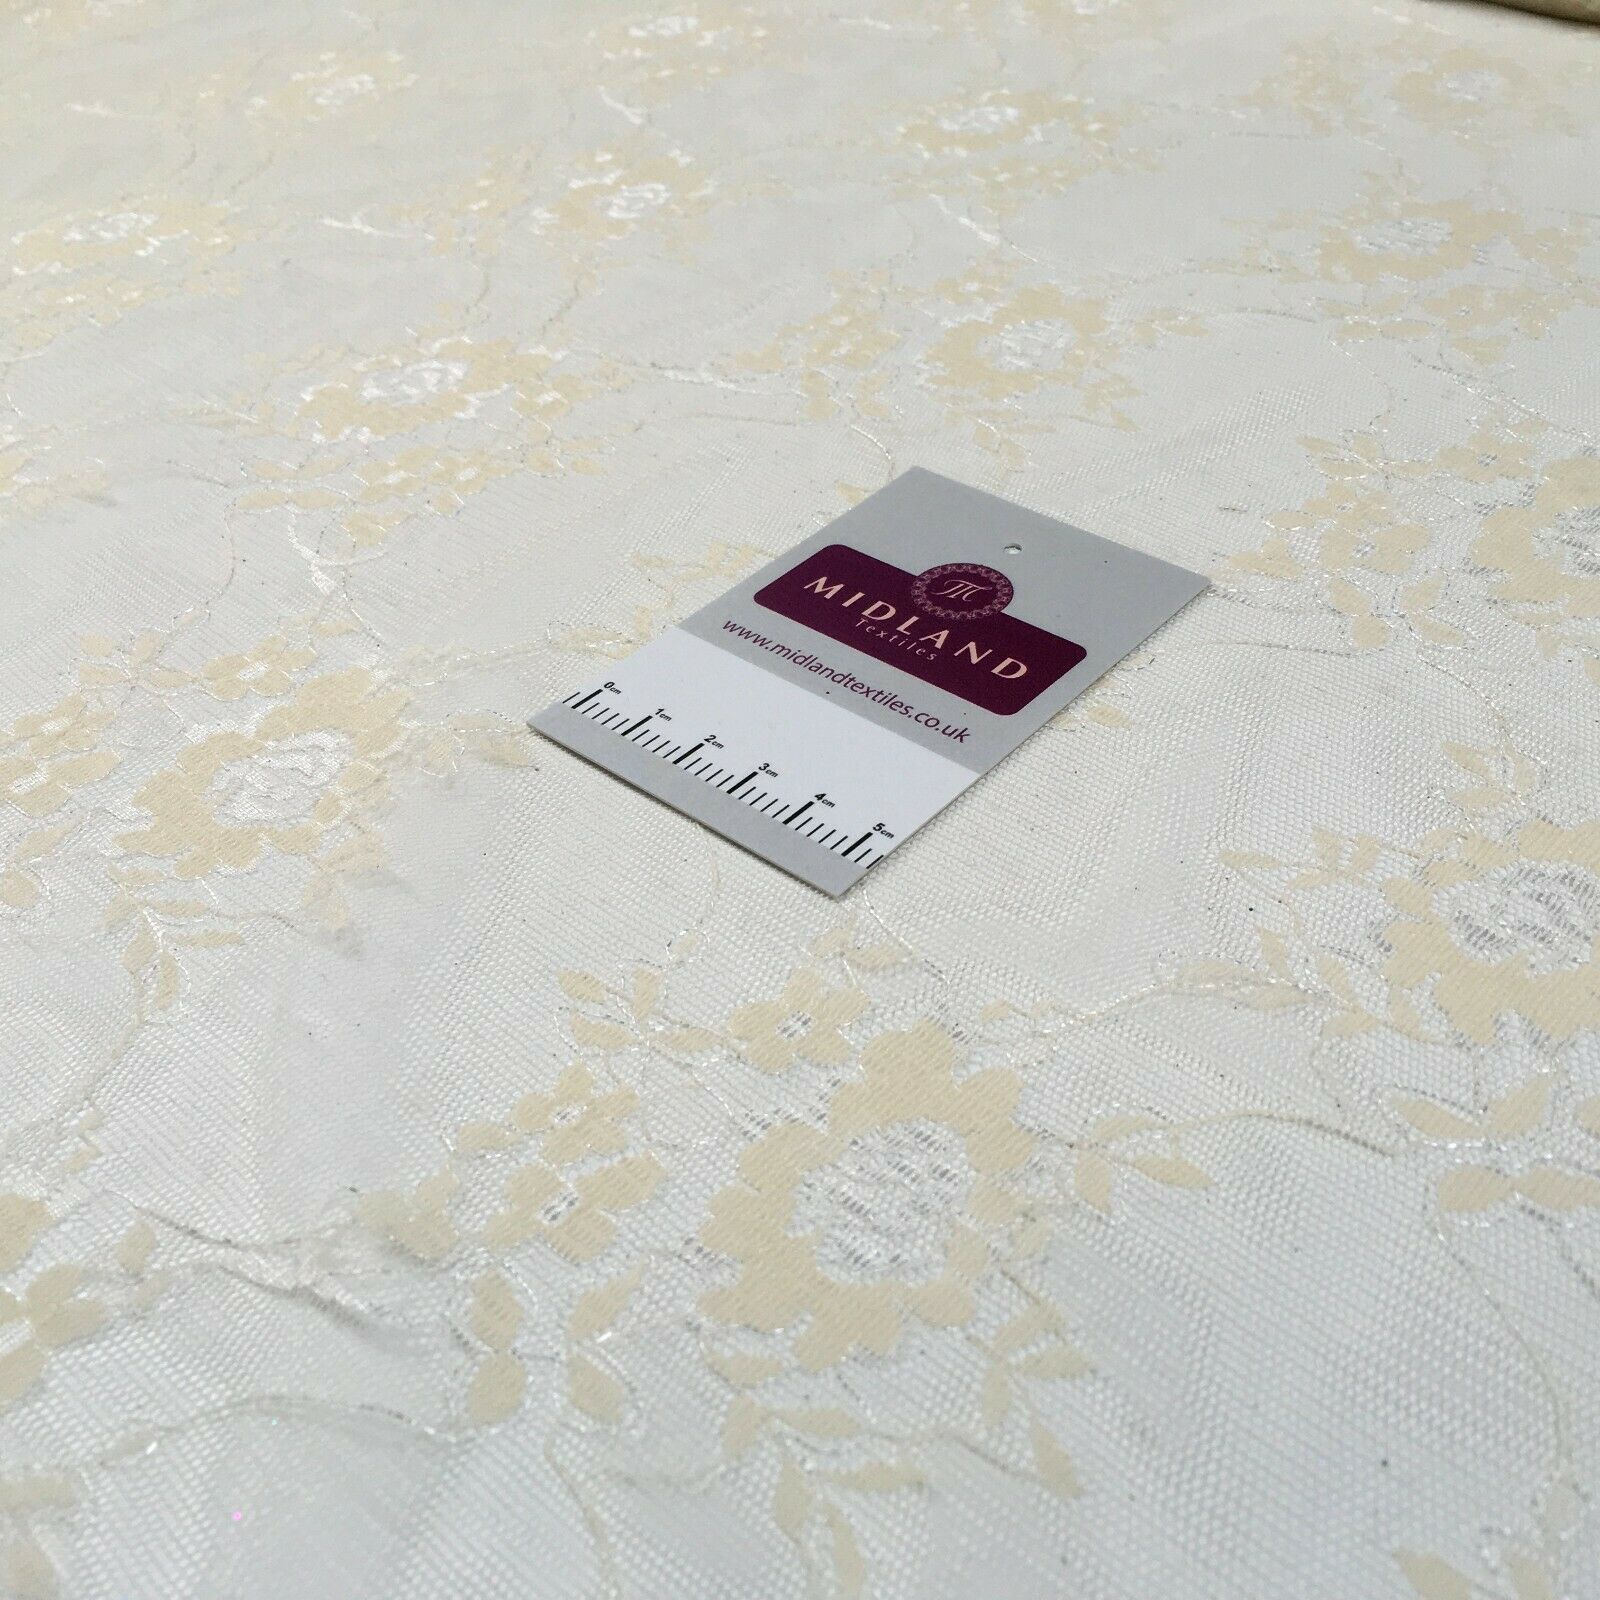 Cream Floral lace dress Fabric 150 cm M186-57 Mtex